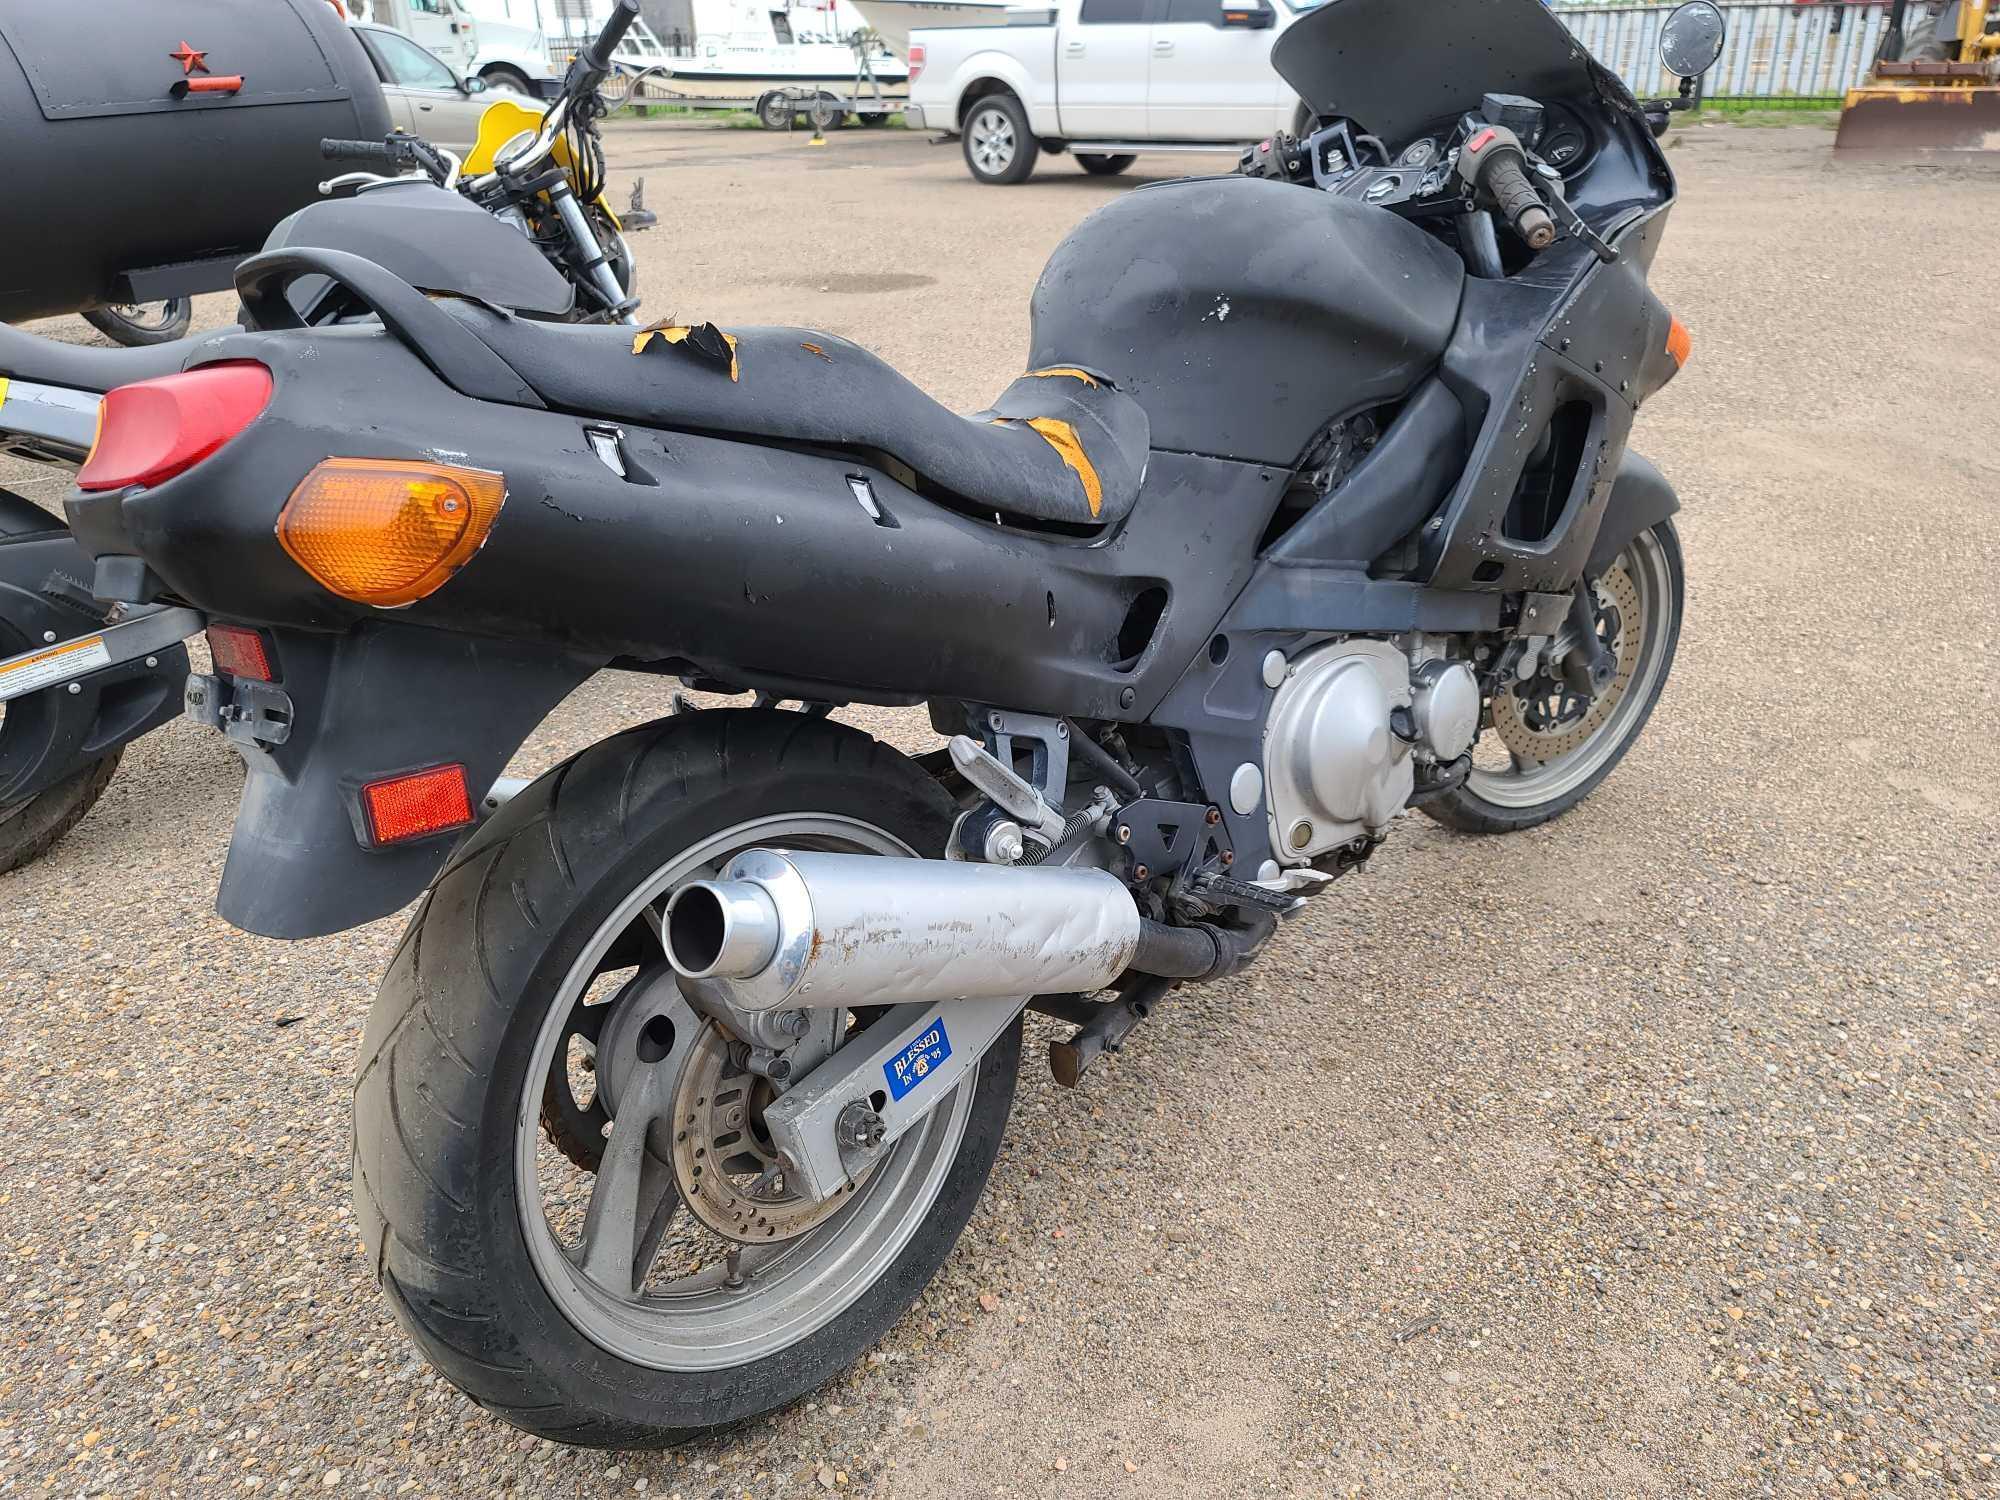 2001 Kawasaki ZX600-E Motorcycle, VIN # JKAZX4E141B517992